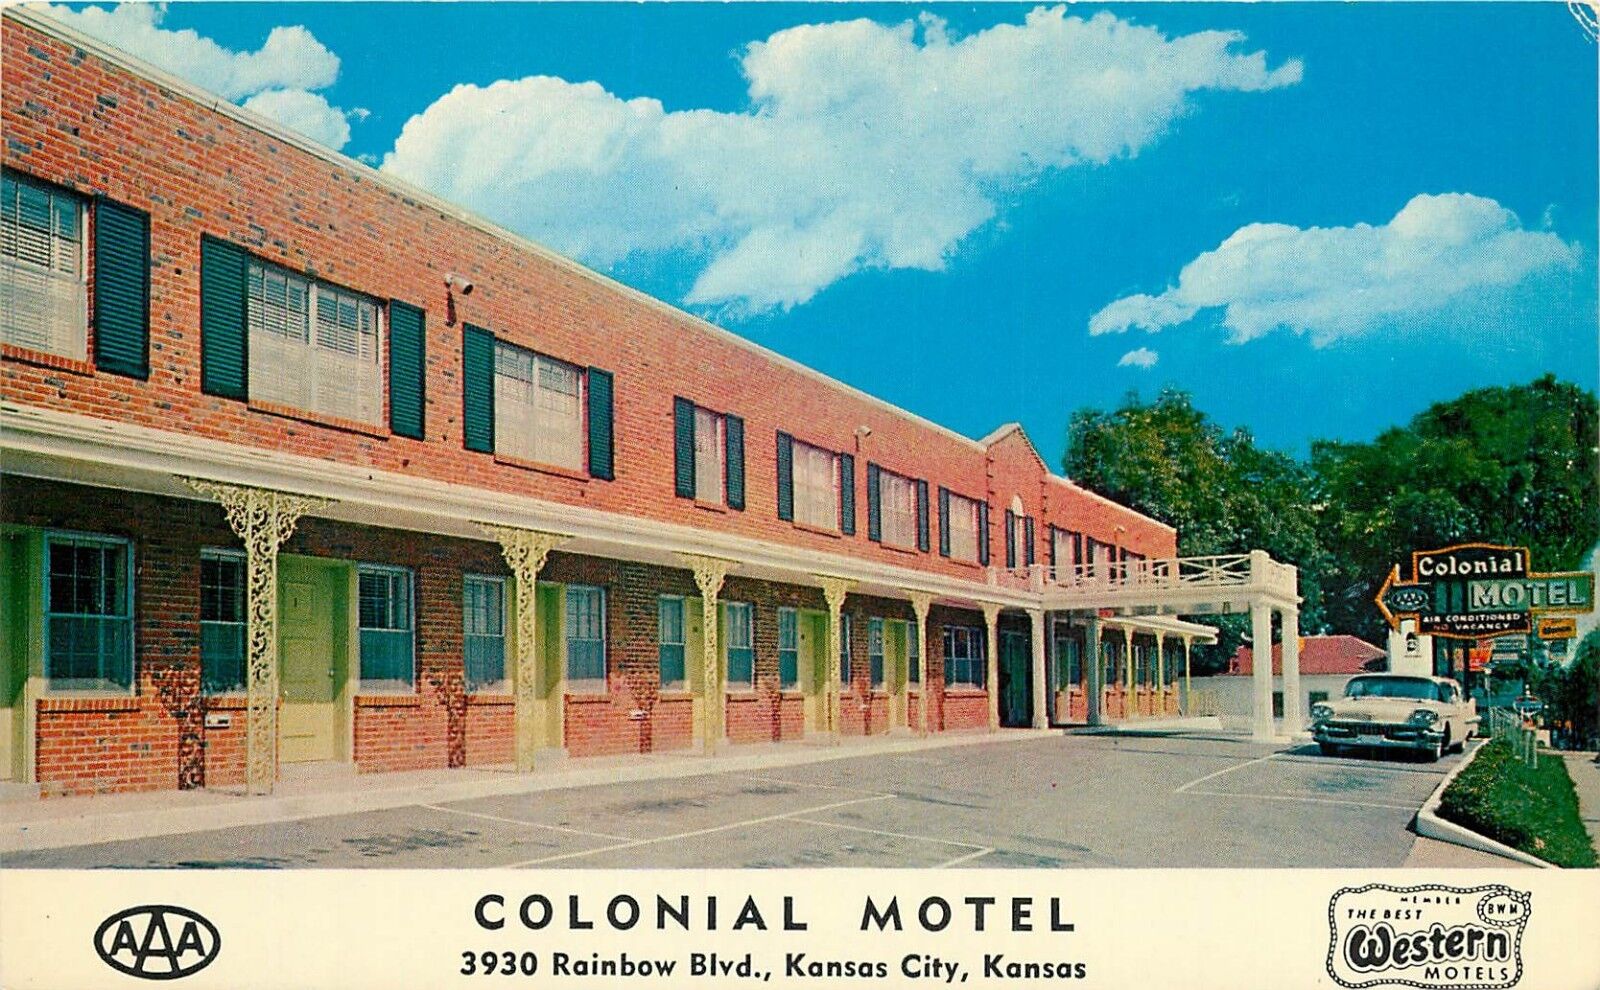 Colonial Motel Kansas City Kansas KS old car Best Western  Postcard